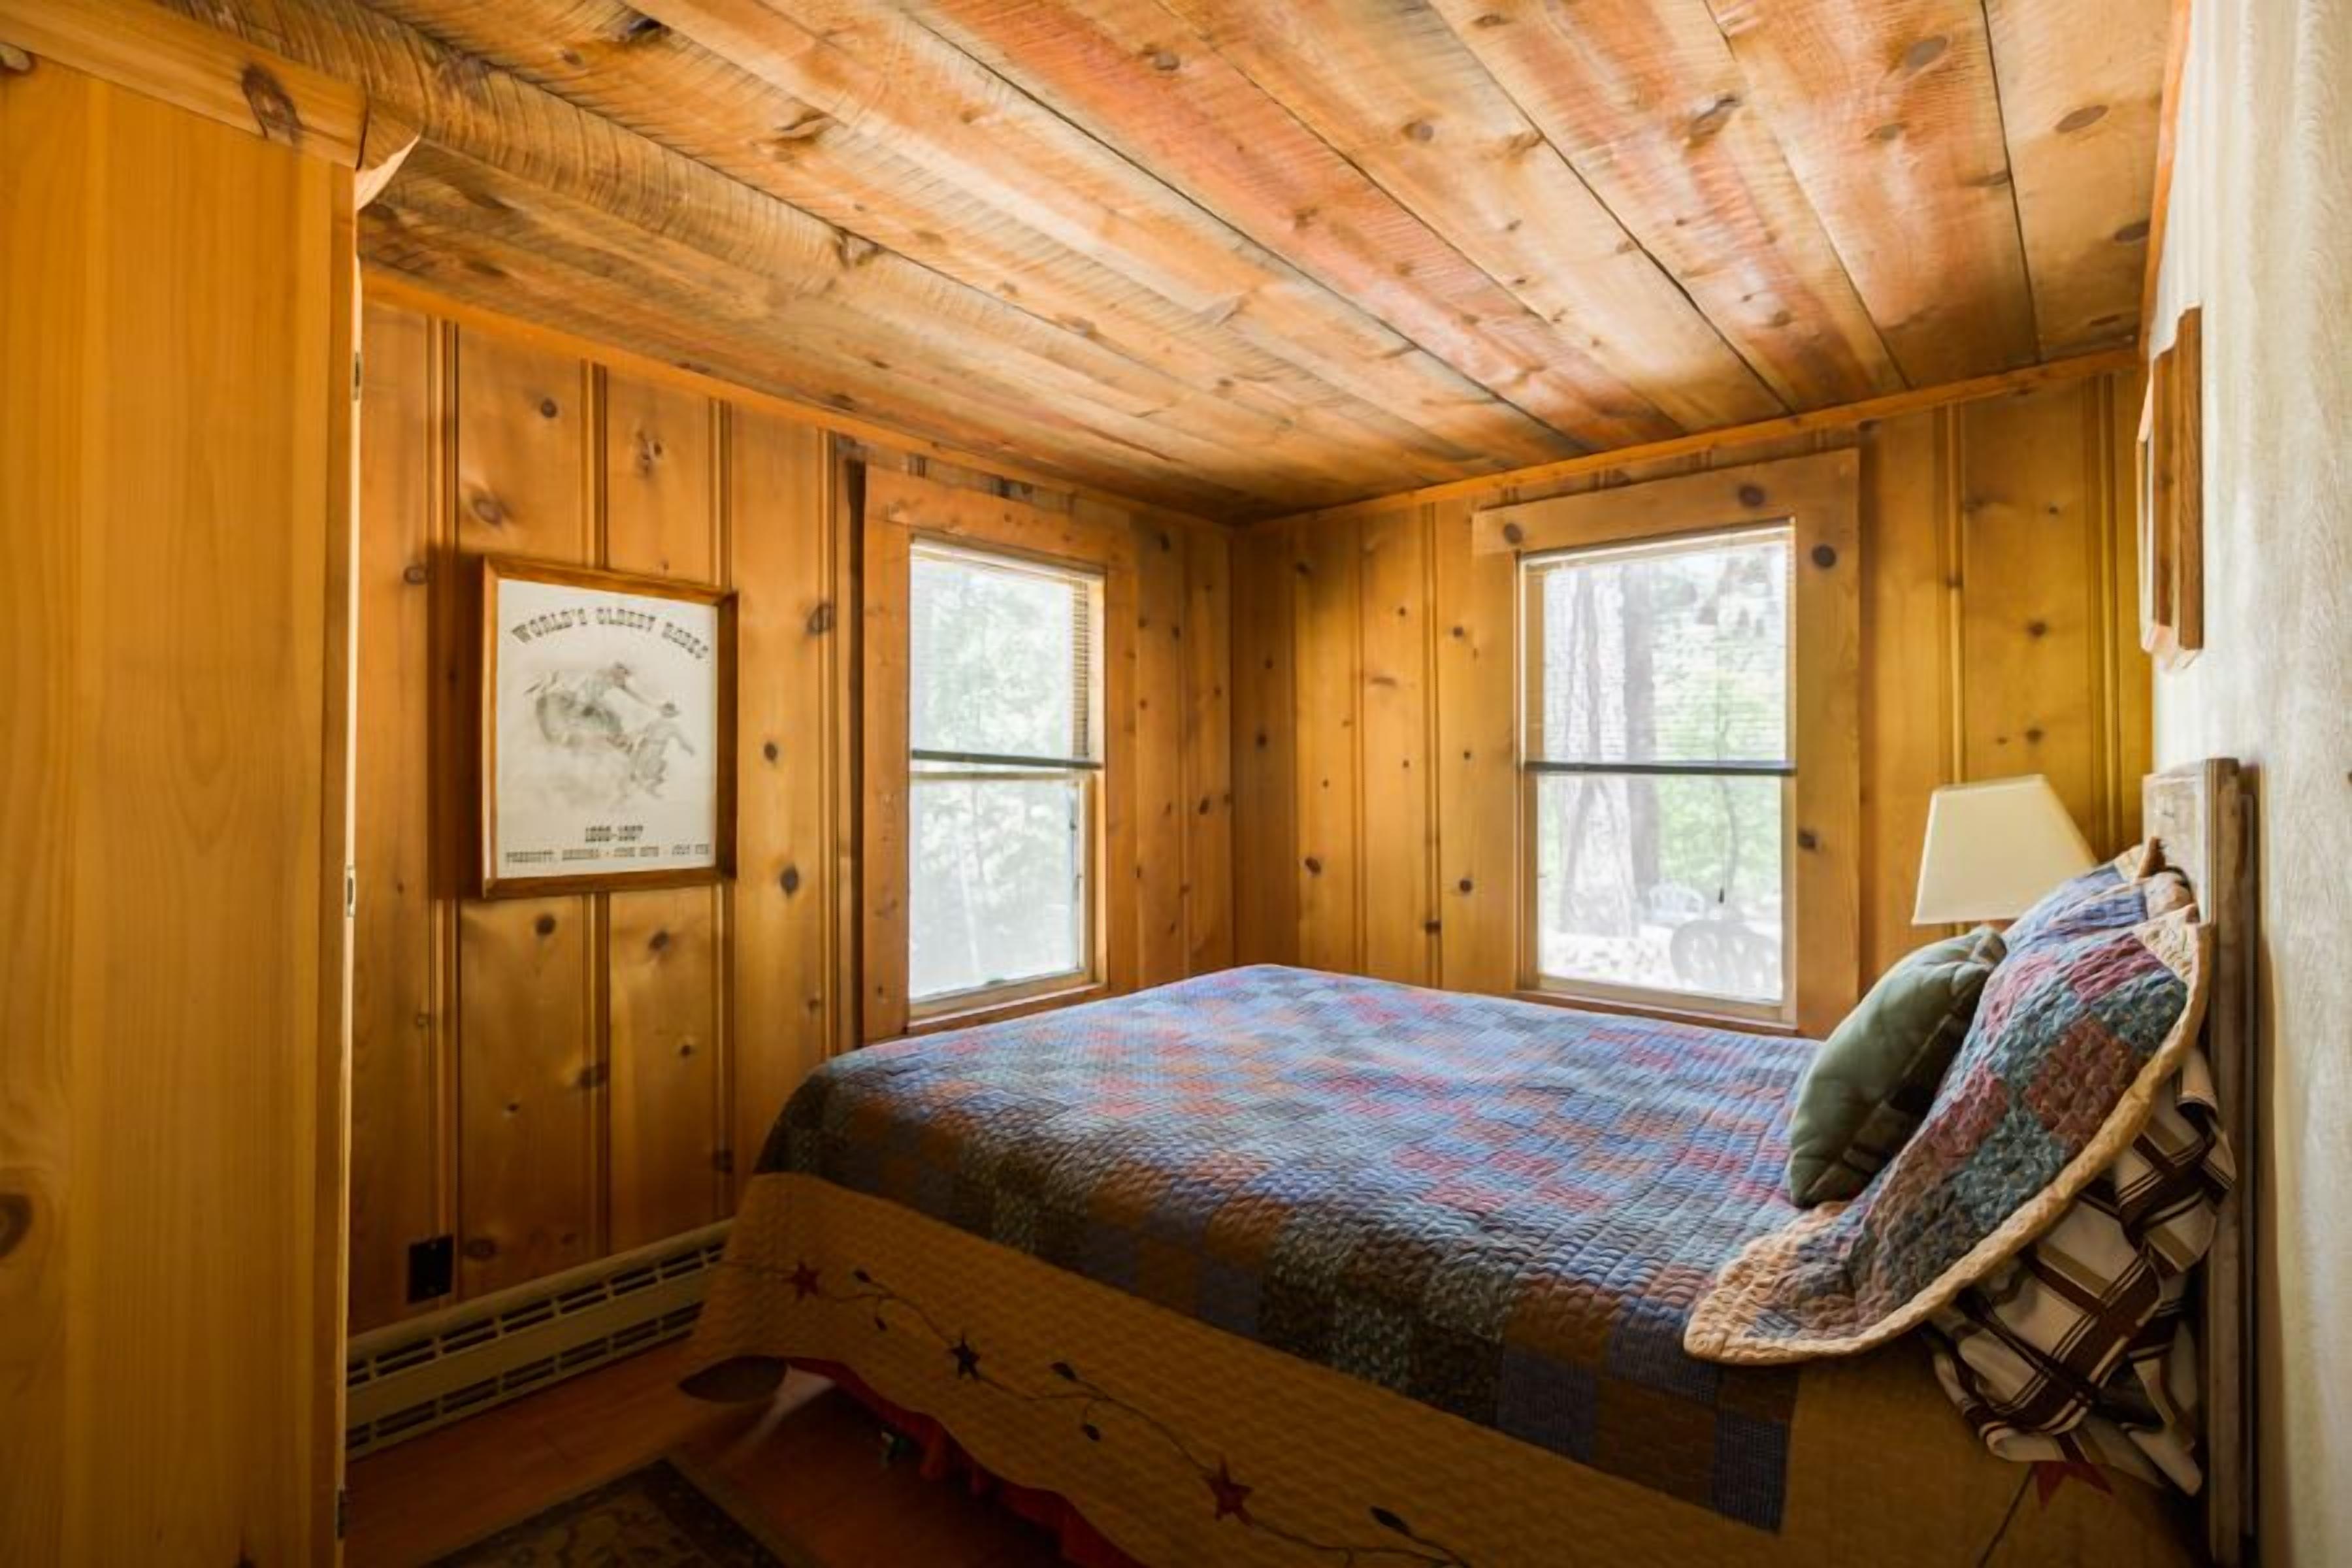 The Bradshaw Mountain Bed & Breakfast